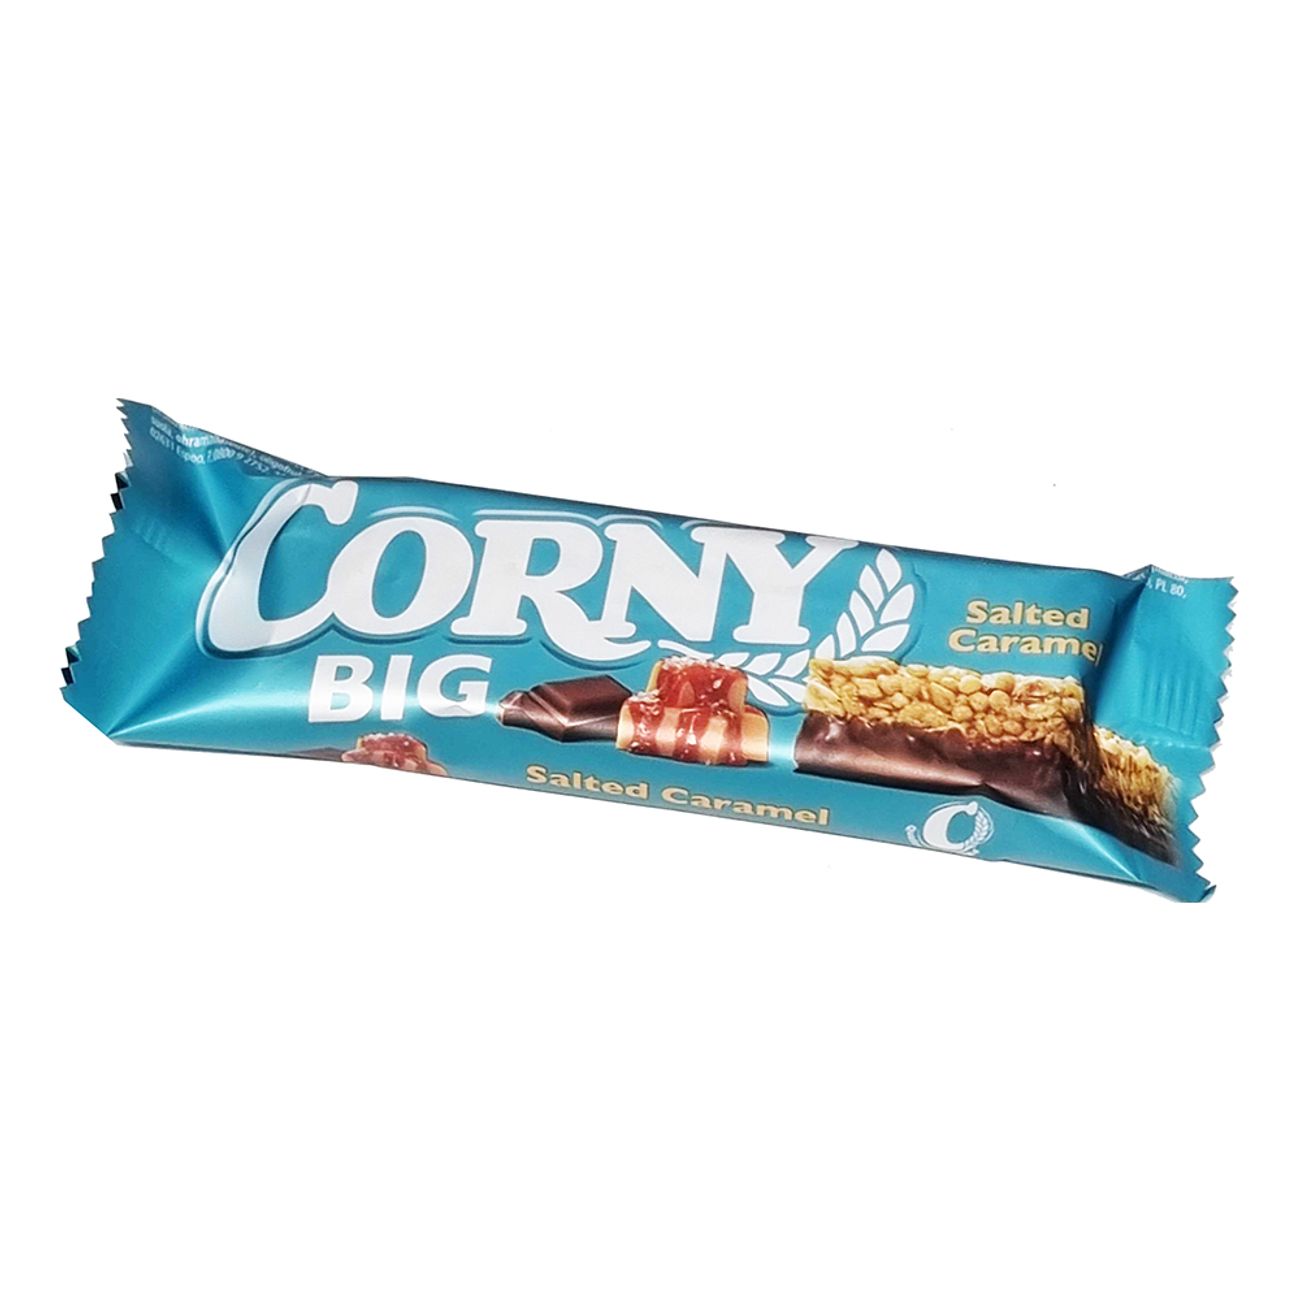 corny-big-salted-caramel-87974-1